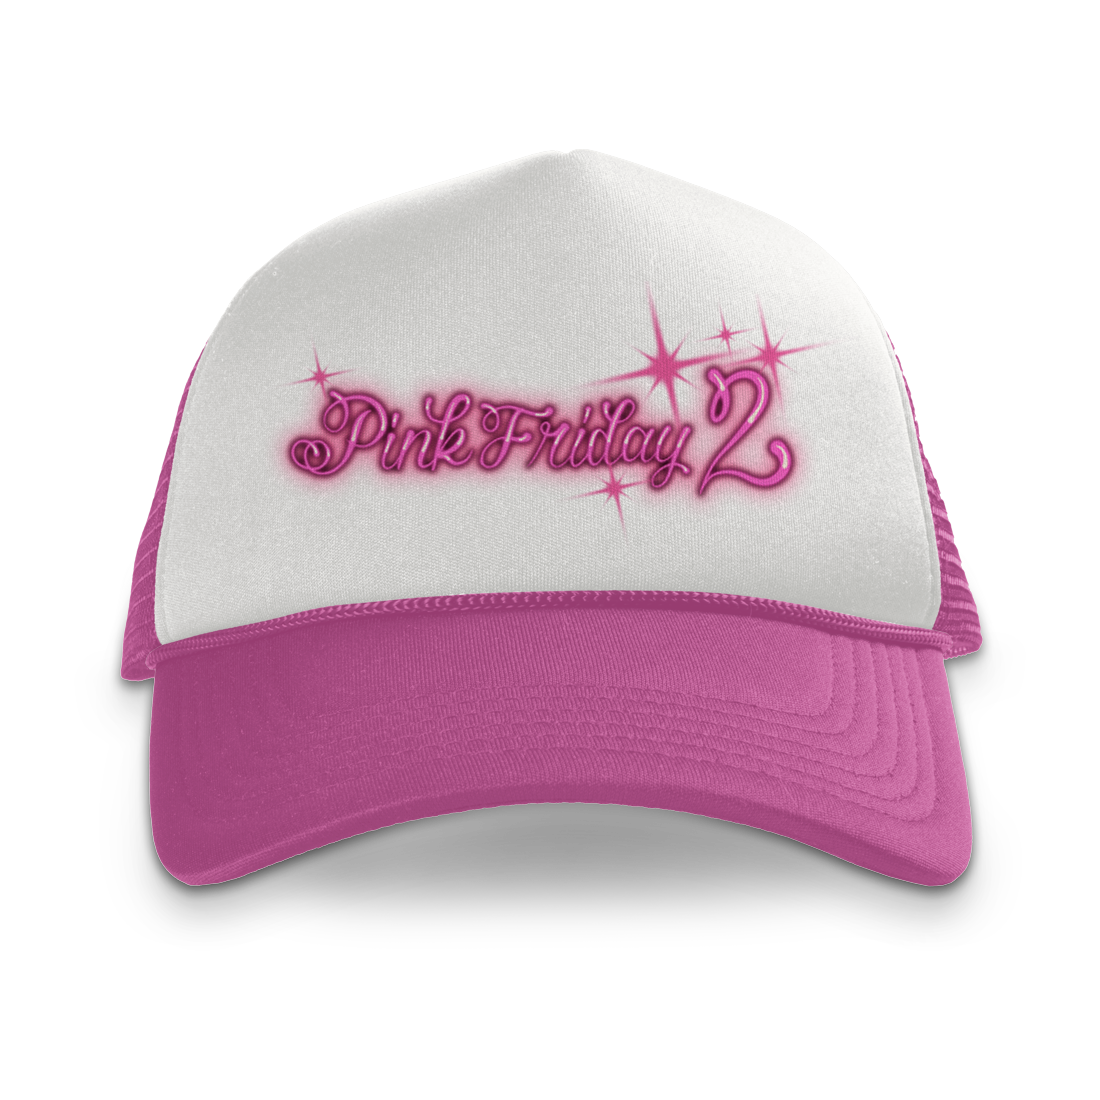 Nicki Minaj - Pink Friday 2 Airbrush Trucker Hat